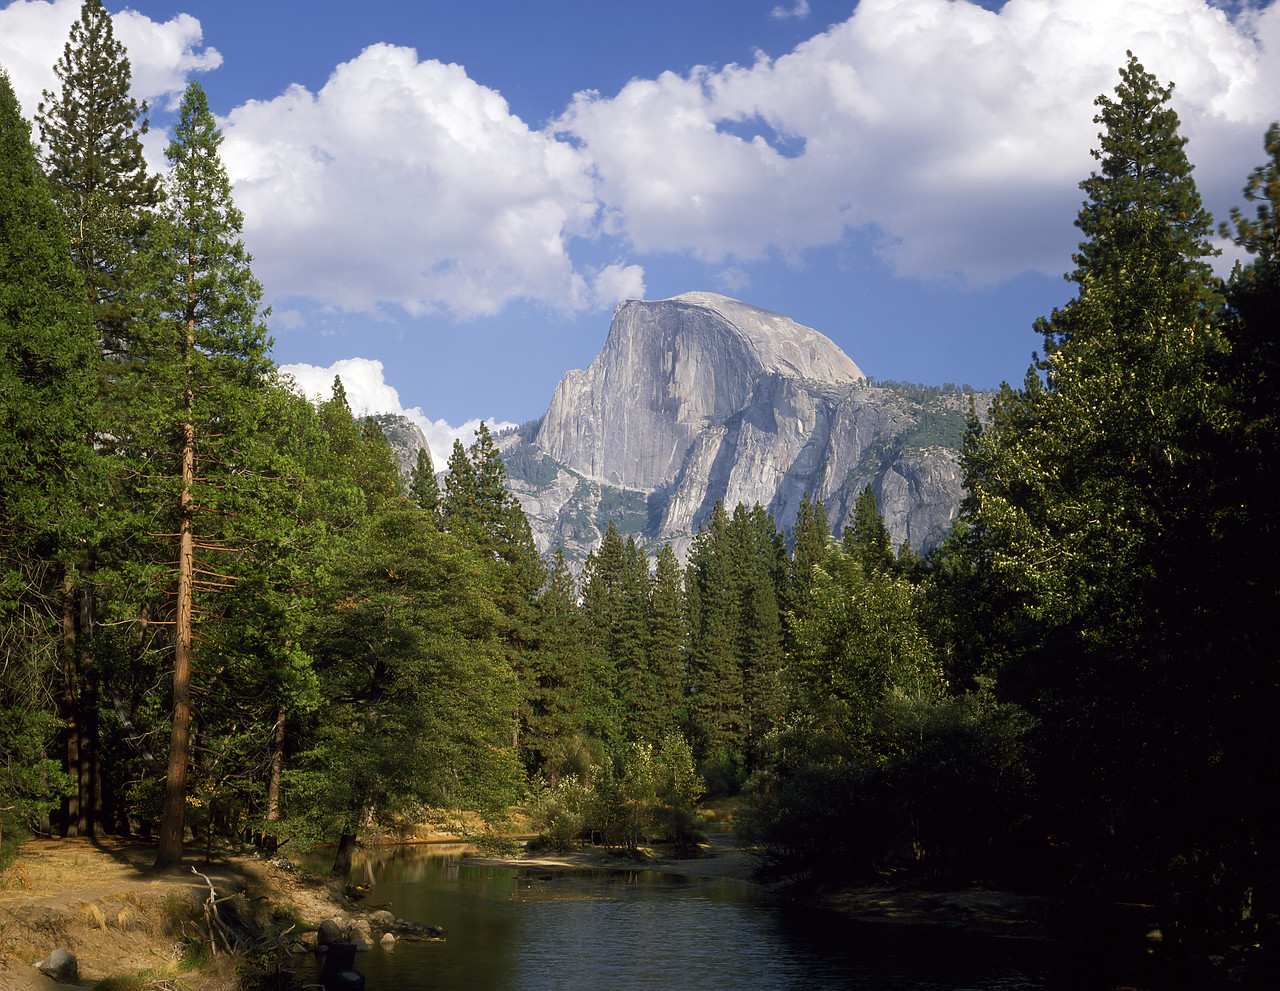 #881589-2 - Half Dome, Yosemite National Park, California, USA